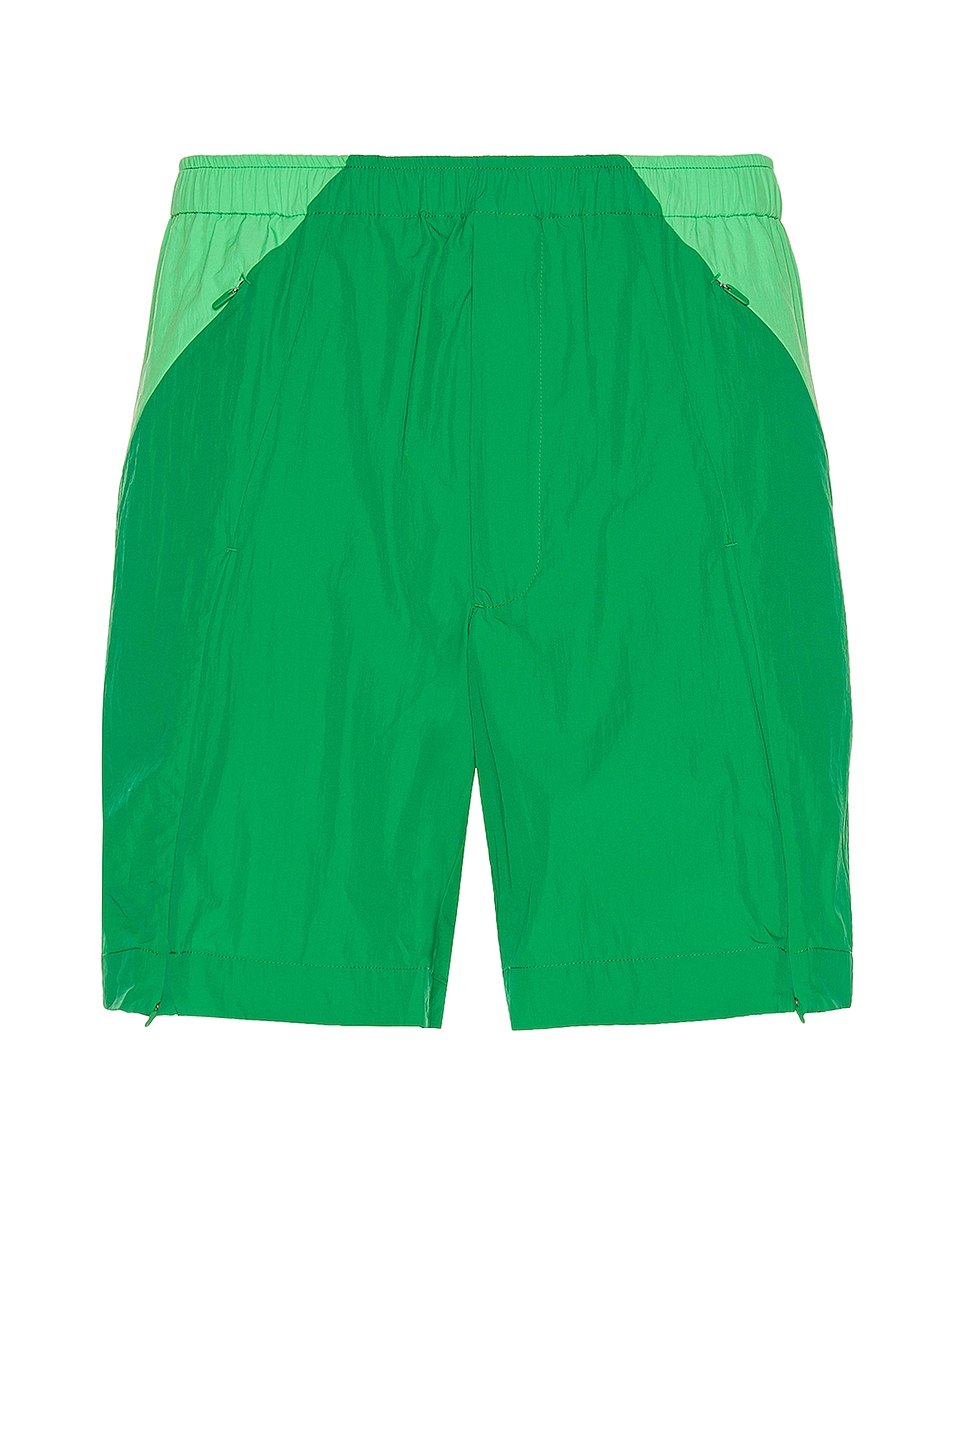 Image 1 of Y-3 Yohji Yamamoto Classic Light Shell Running Shorts in Green & Semi Flash Lime